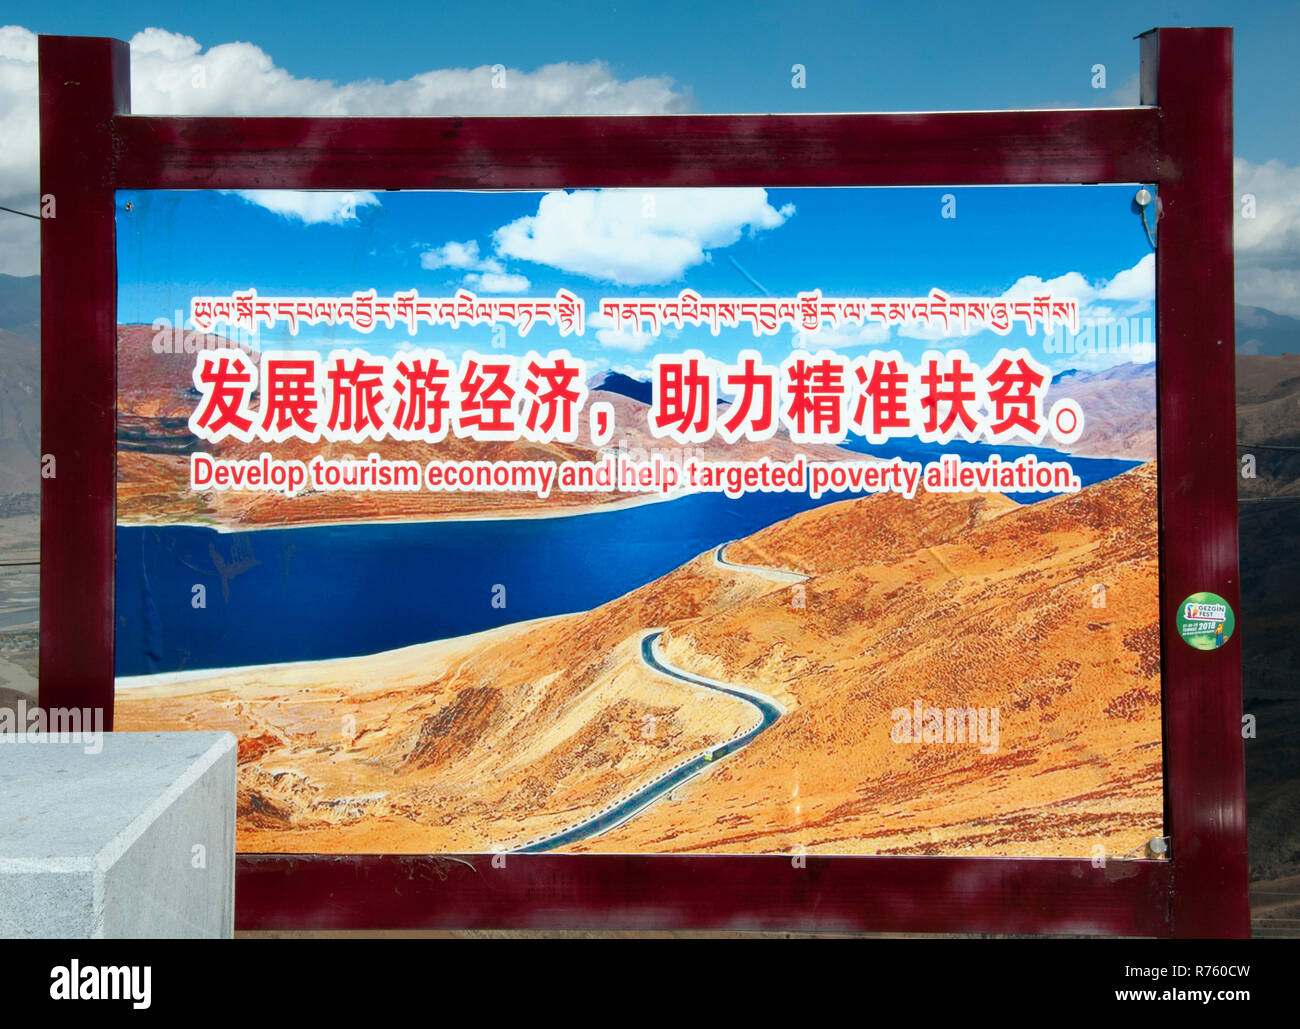 Propaganda billboard heralding development for tourism to alleviate poverty, at a rest area above Yamdrok Tso (Lake), Tibet, China Stock Photo